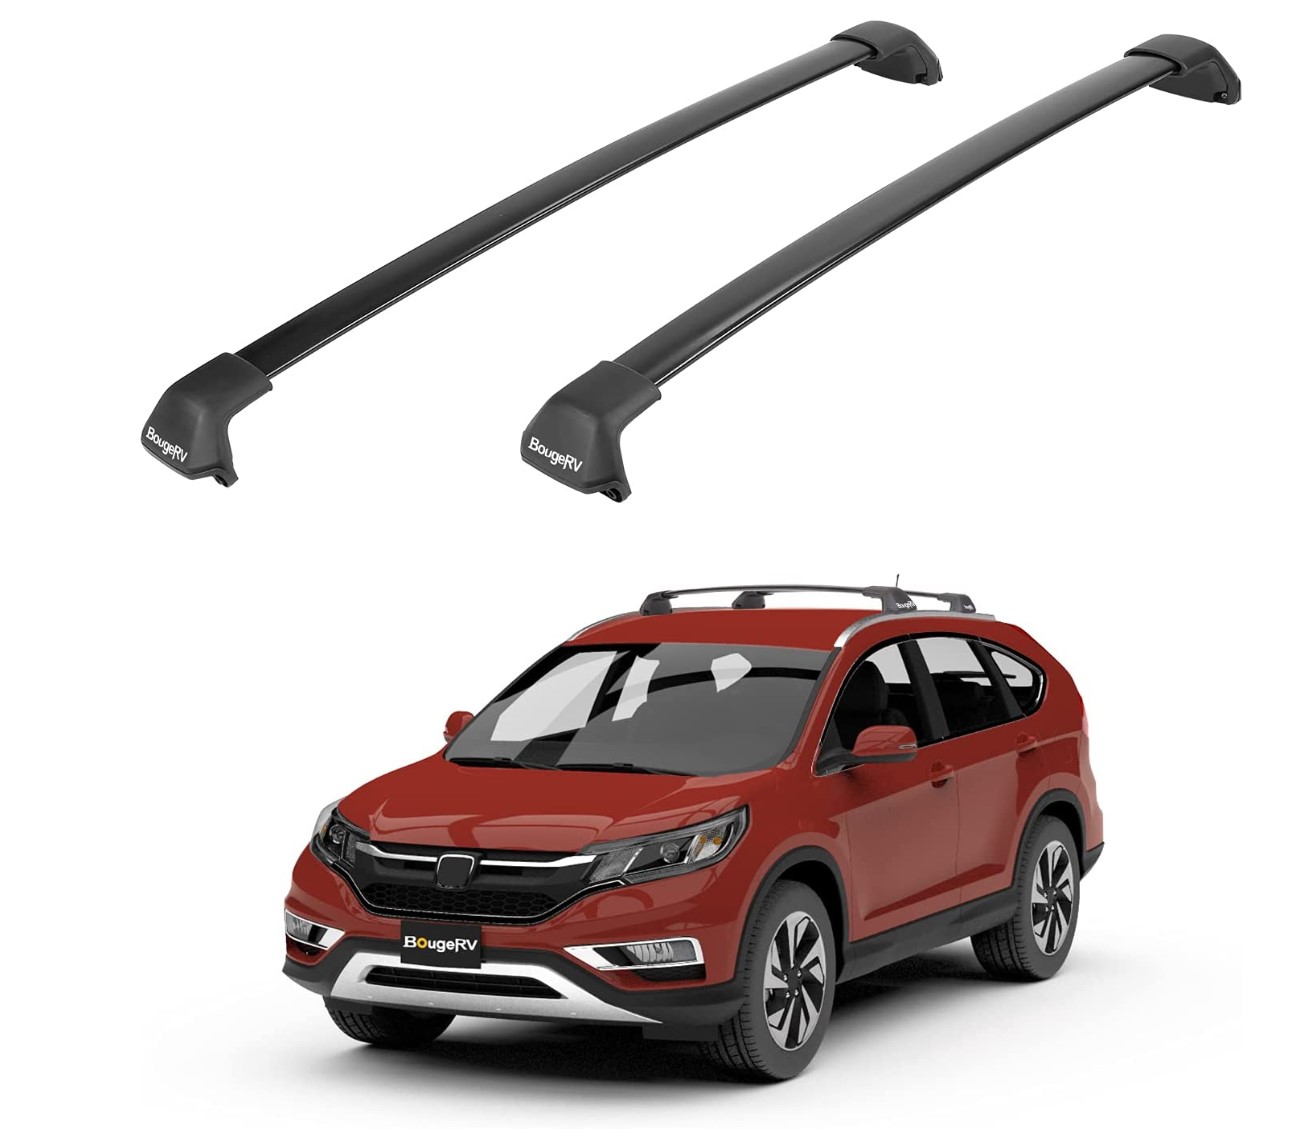 BougeRV Car Roof Rack Cross Bar for Honda CRV 2012-2016 with Side Rails Review